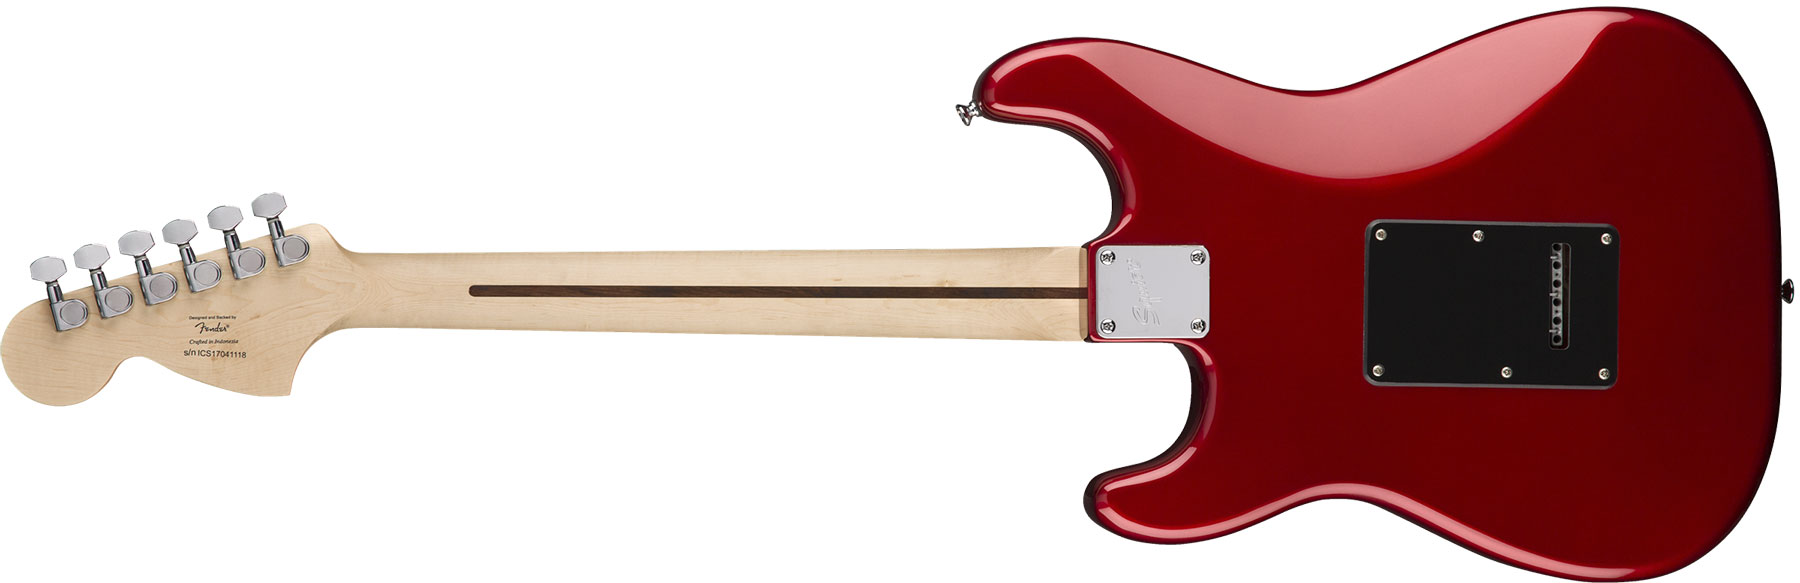 Squier Strat Affinity Hss Pack +fender Frontman 15g Trem Lau - Candy Apple Red - Elektrische gitaar set - Variation 2